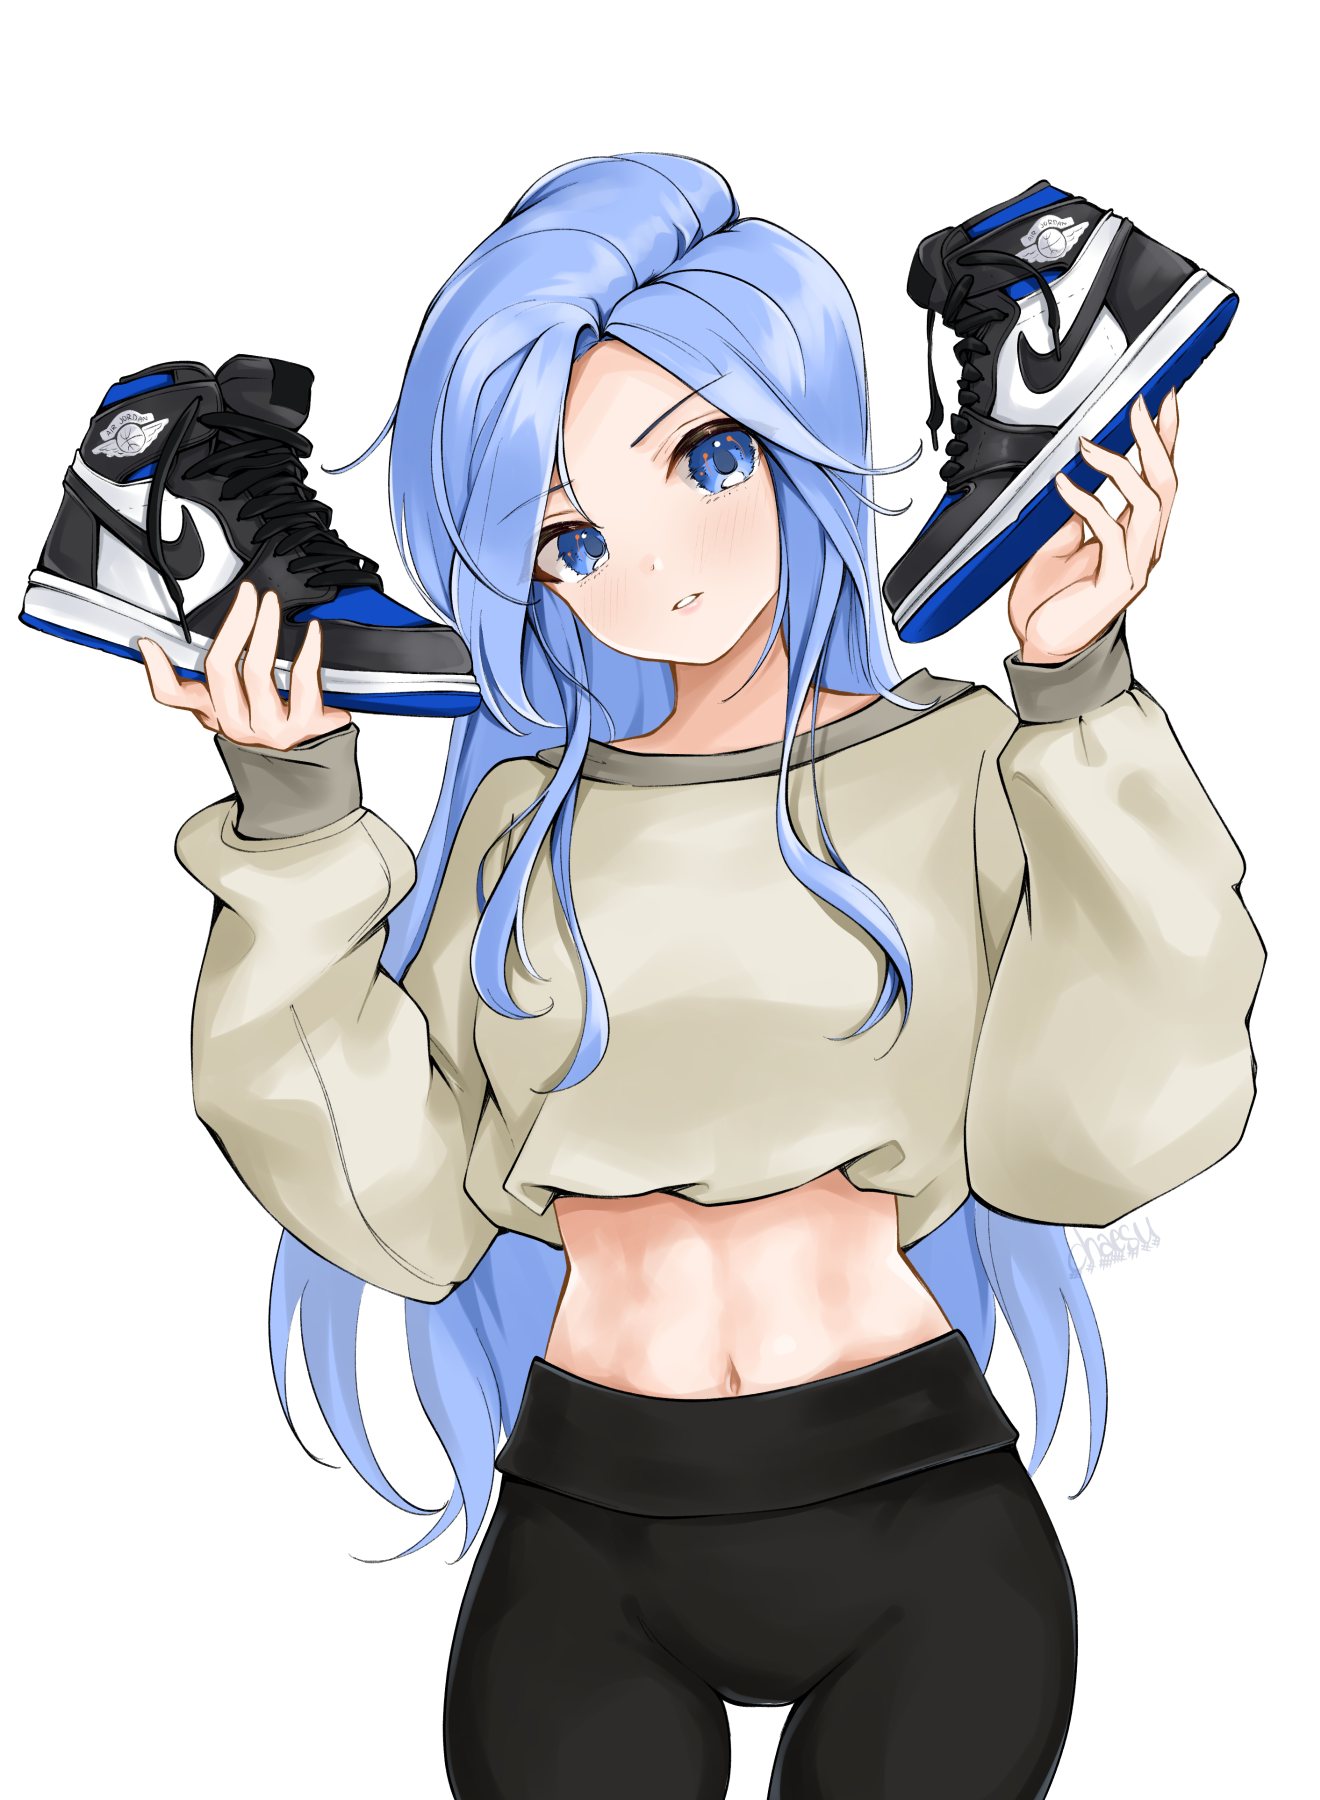 Anime 1320x1800 anime anime girls digital art artwork 2D portrait display Chaesu blue hair blue eyes sweatshirts yoga pants shoes sneakers bare midriff